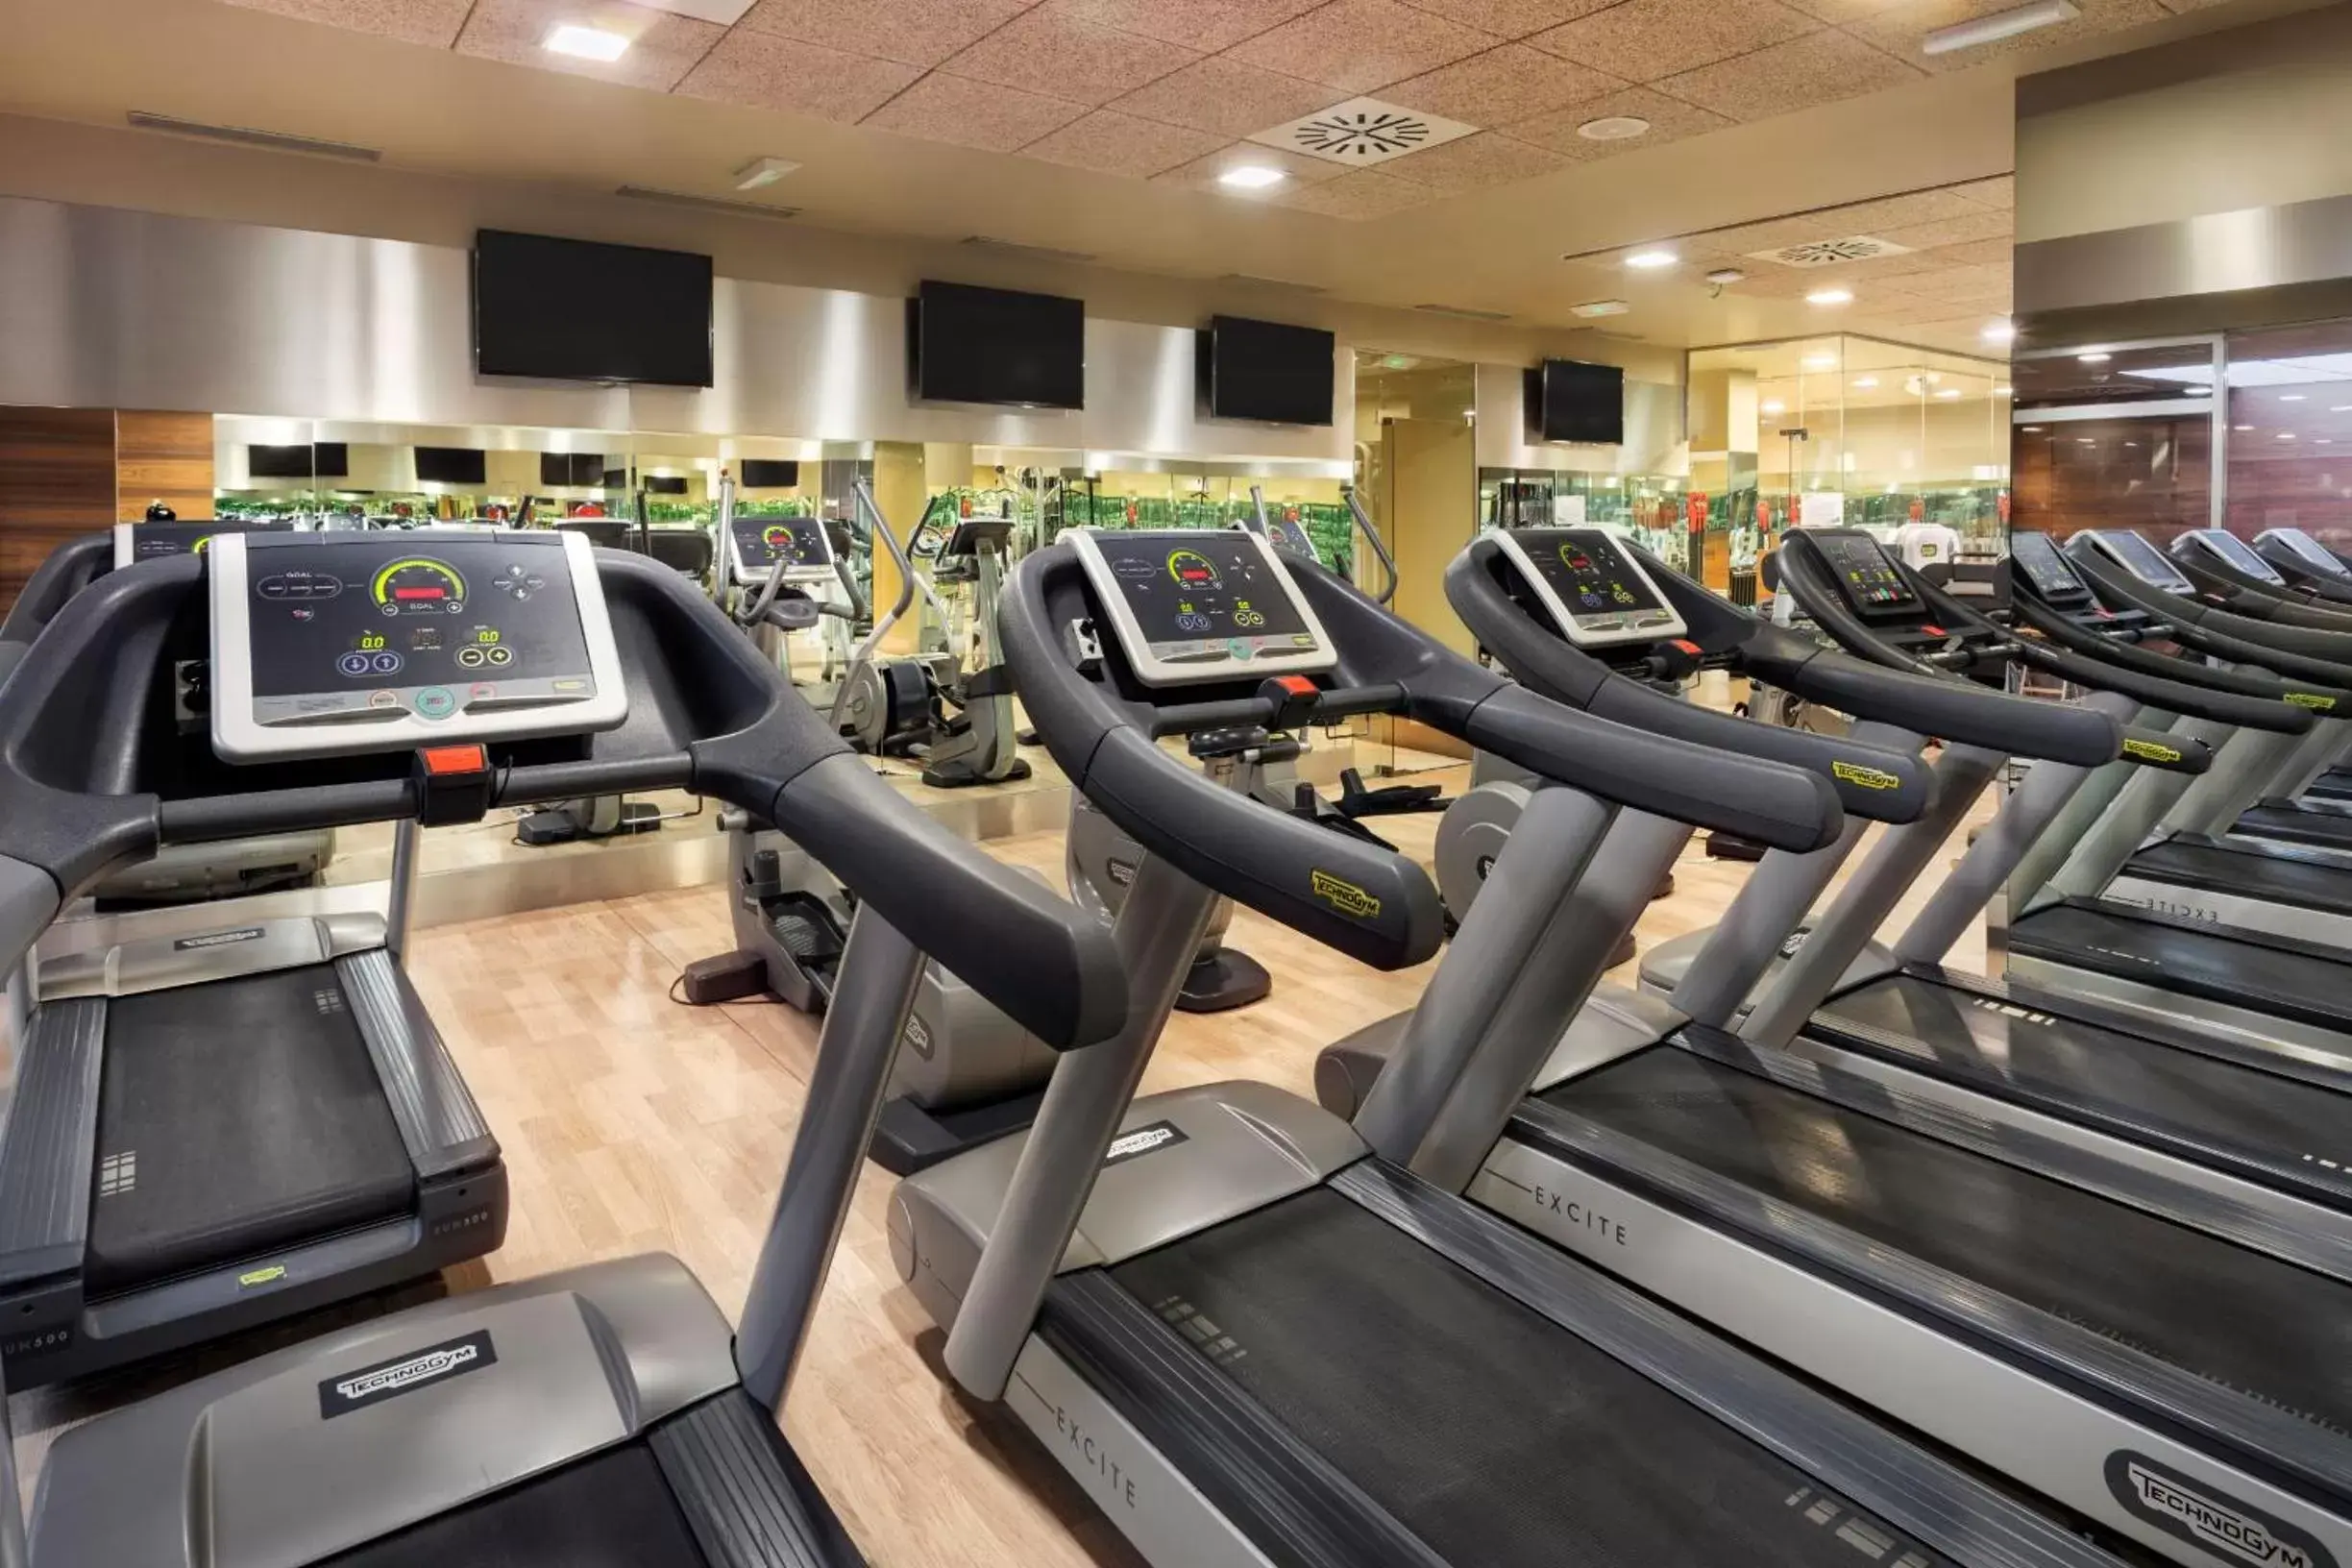 Fitness centre/facilities, Fitness Center/Facilities in Melia Avenida de America